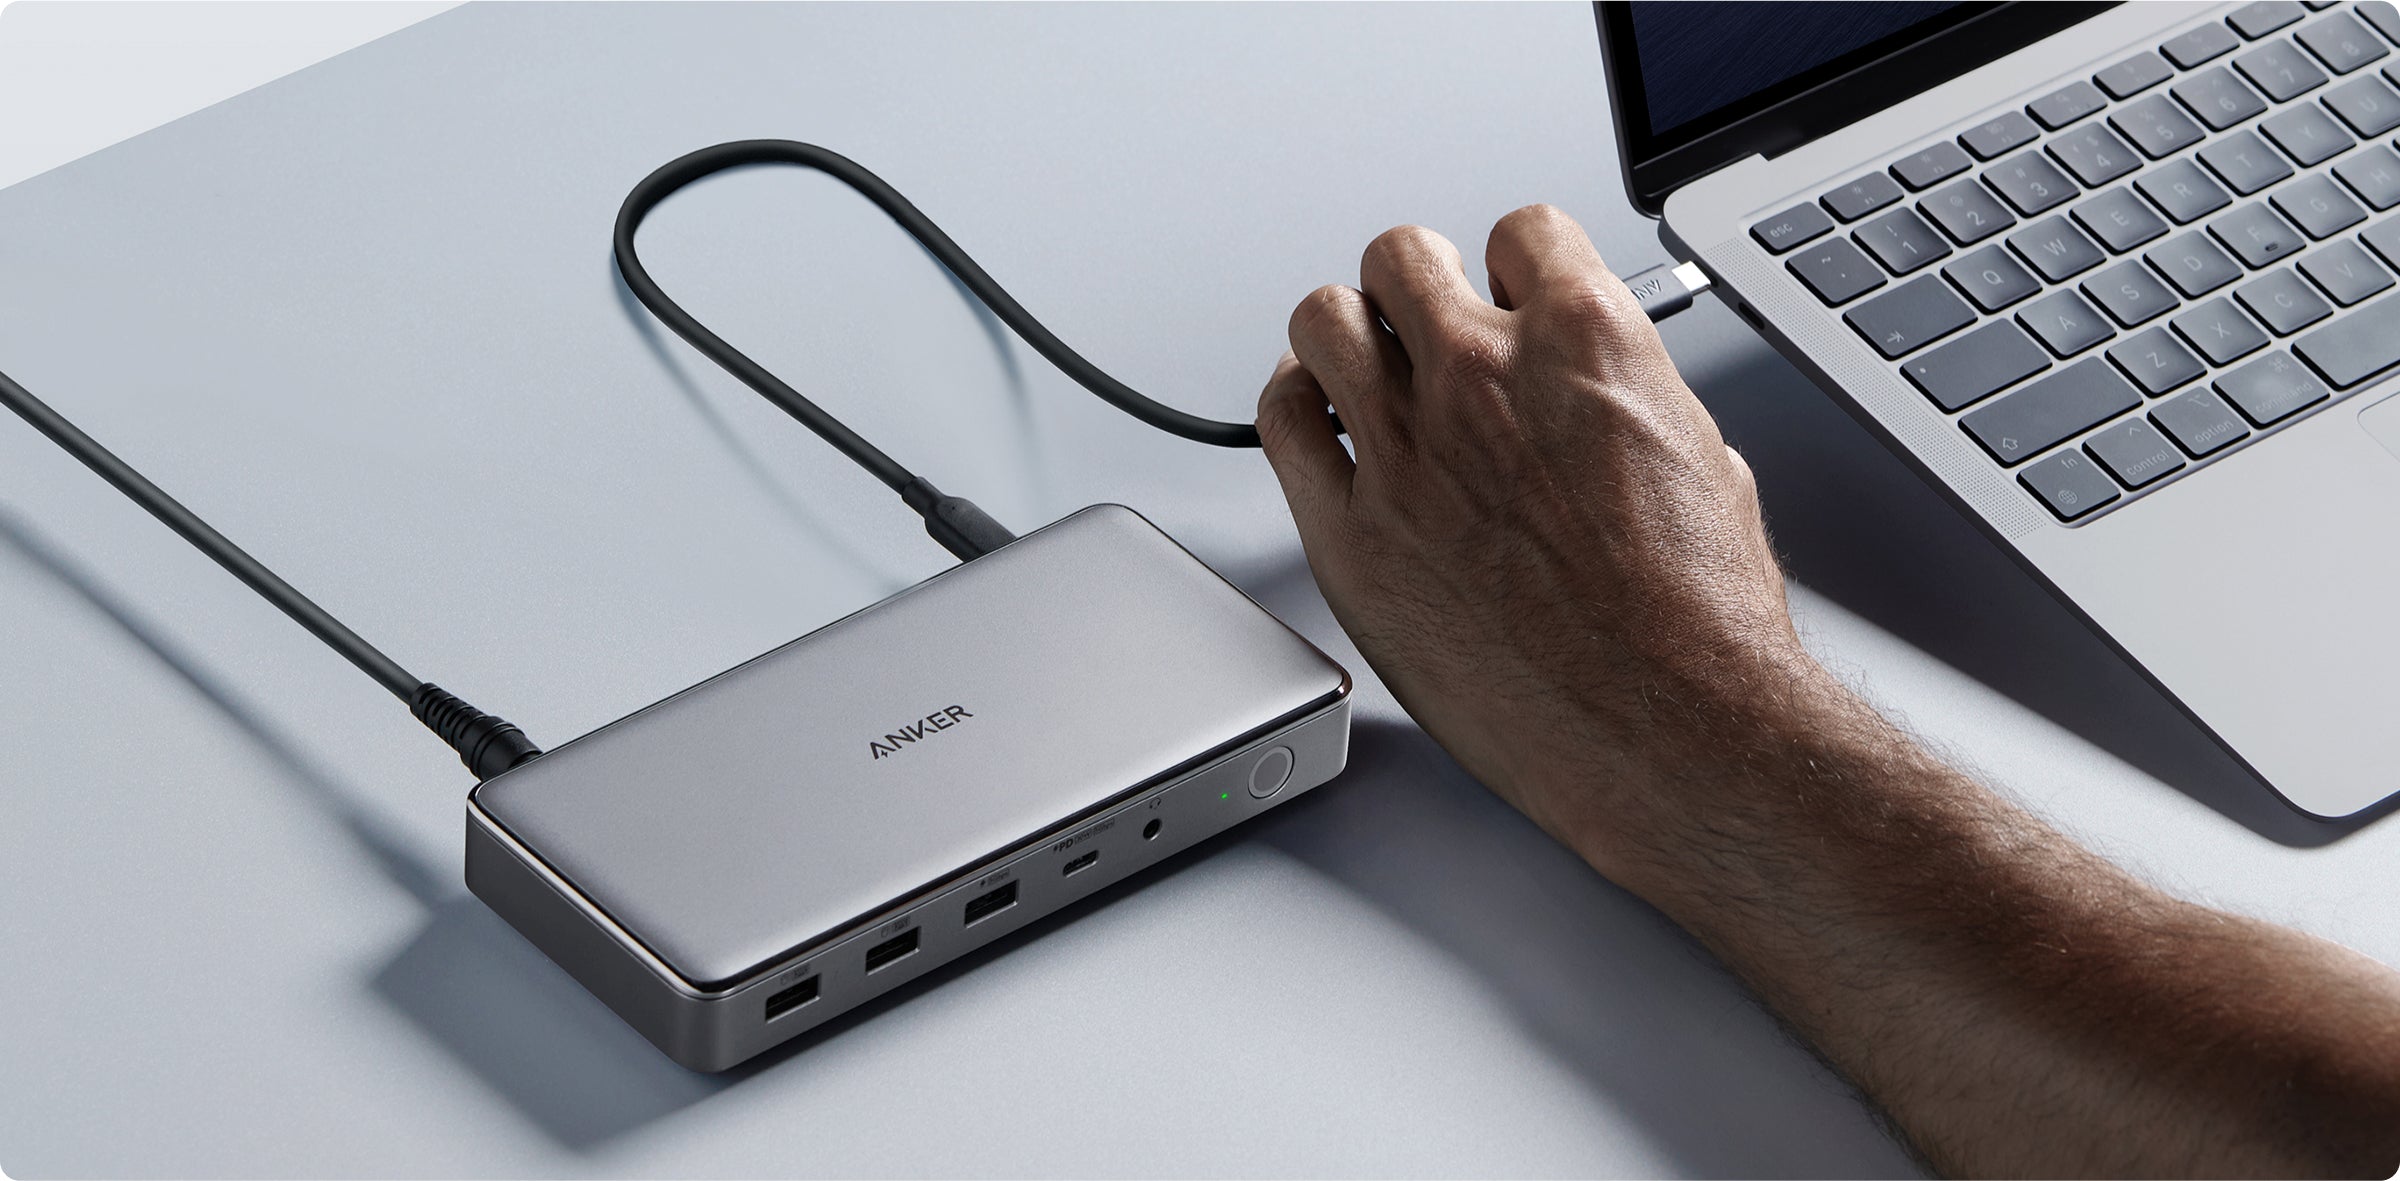 Anker 563 USB-C Hub (10-in-1, Dual 4K HDMI, for MacBook) - Anker US